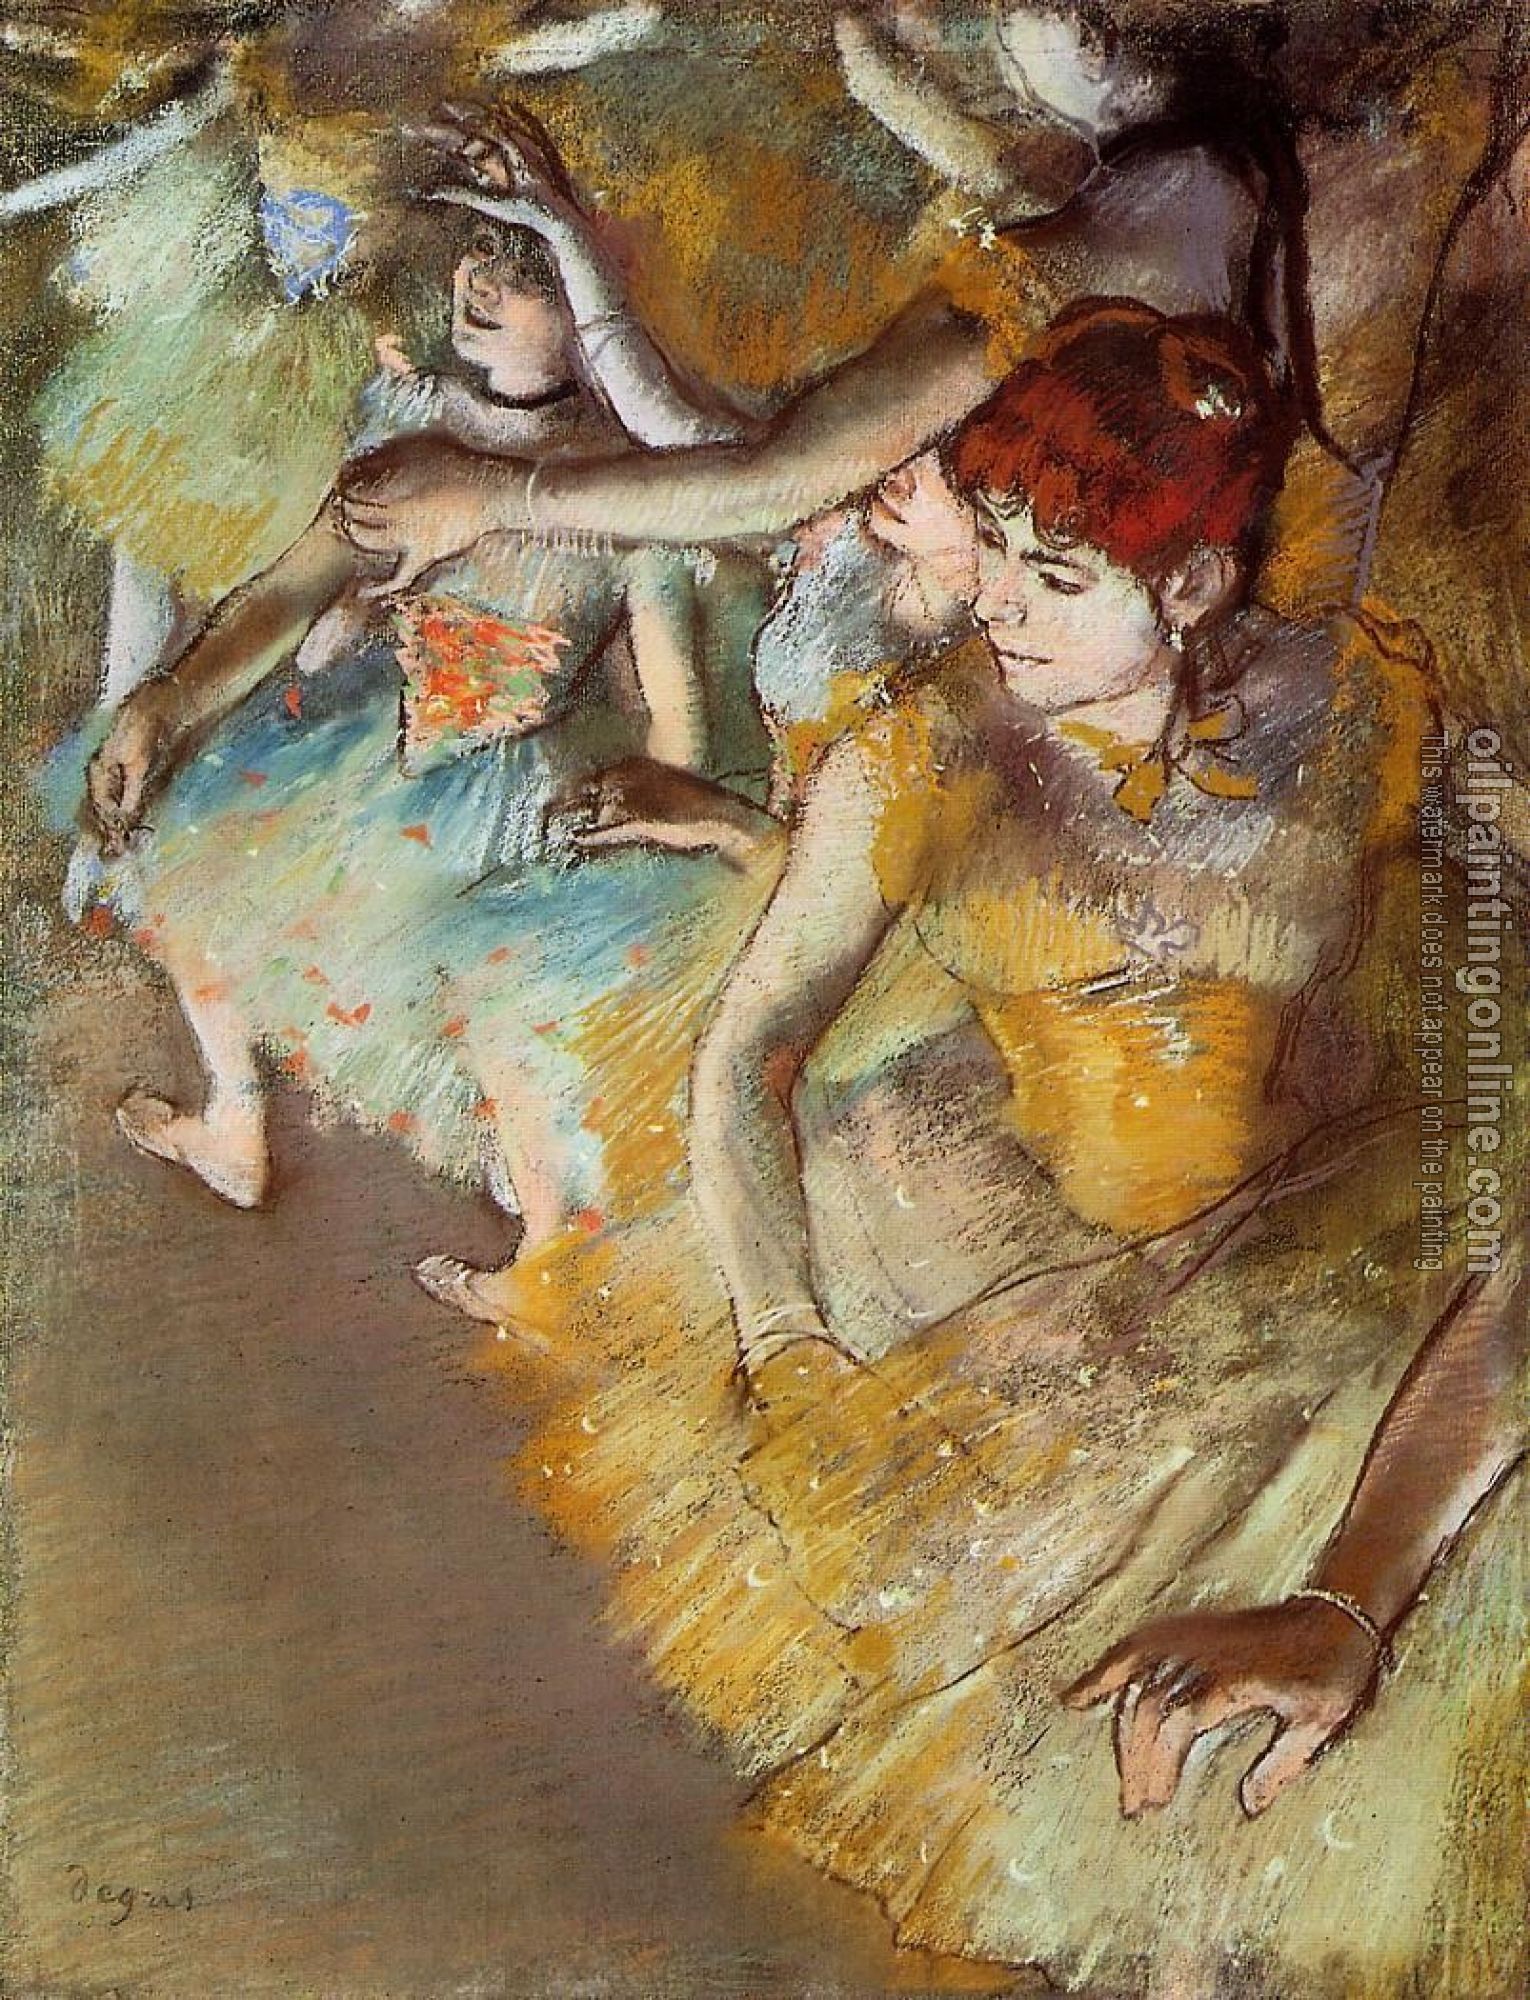 Degas, Edgar - Ballet Dancers on the Stage